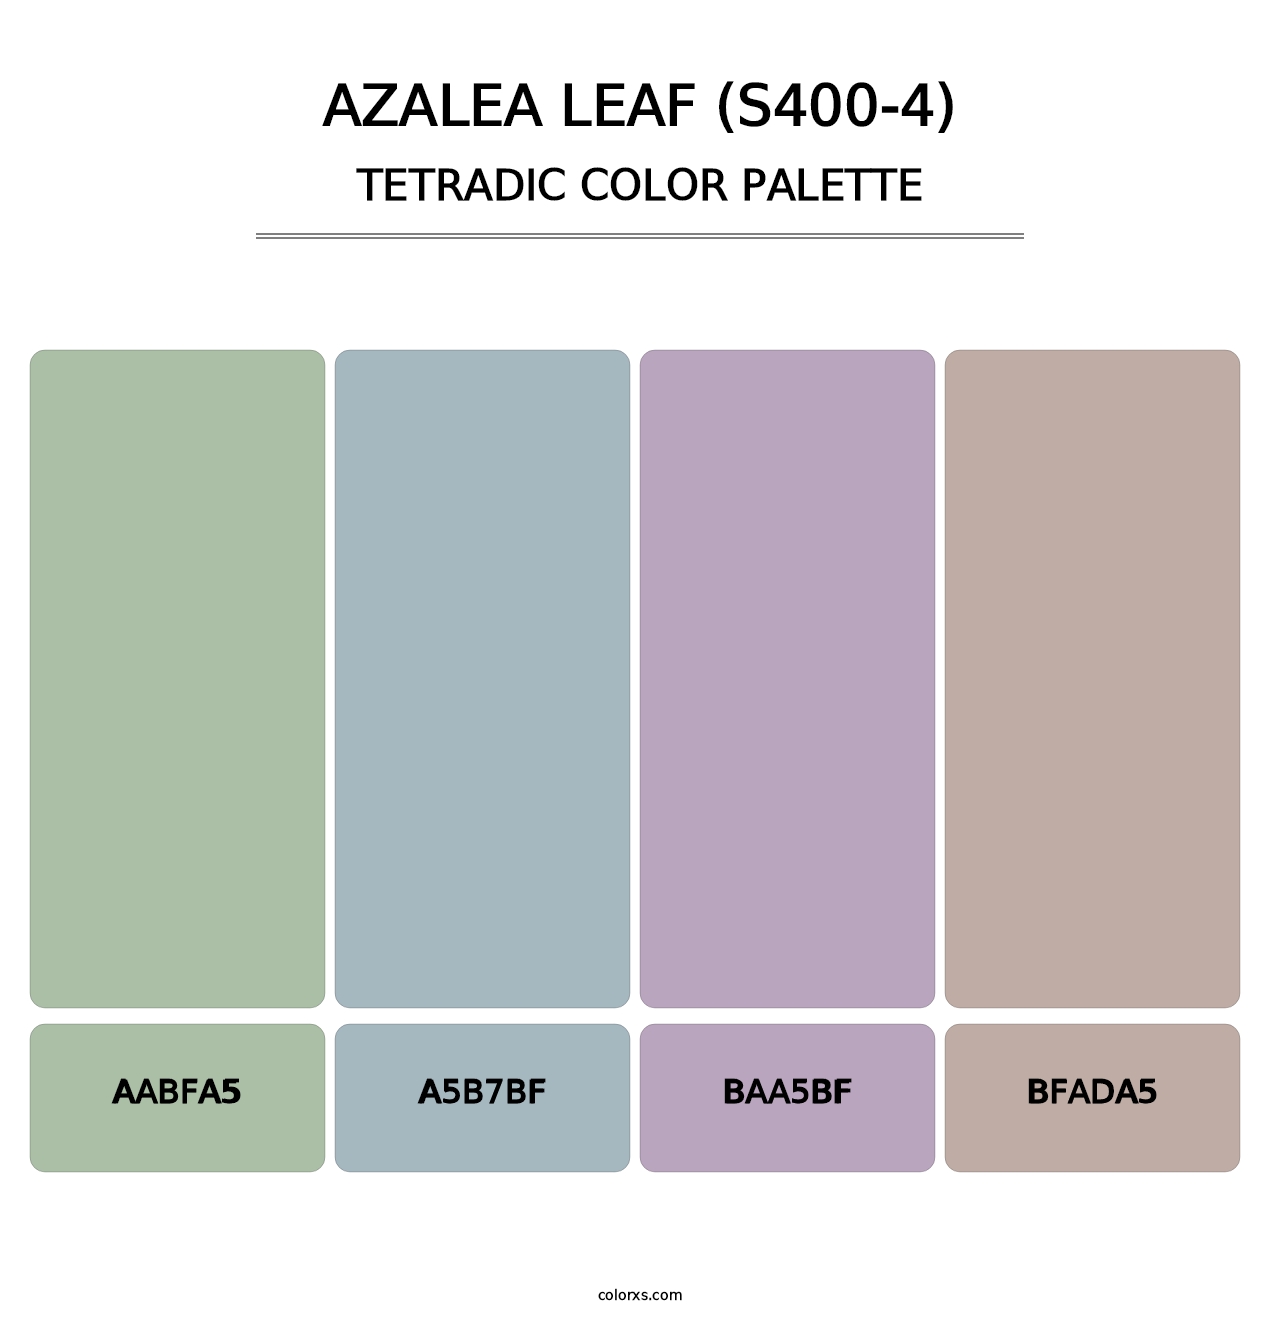 Azalea Leaf (S400-4) - Tetradic Color Palette